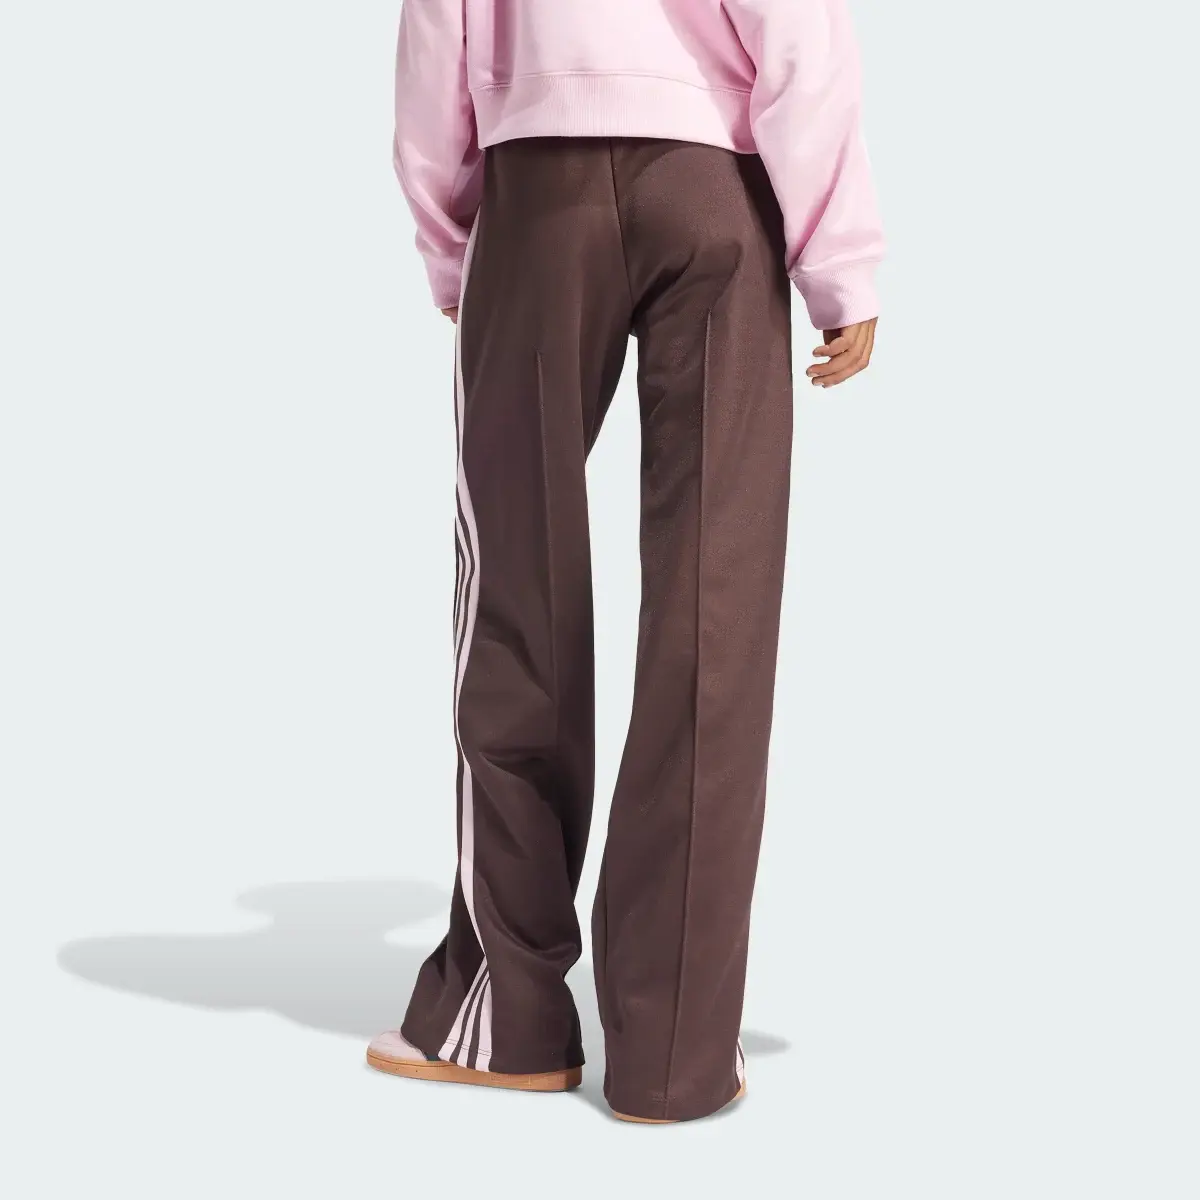 Adidas Beckenbauer Track Suit Pants. 2